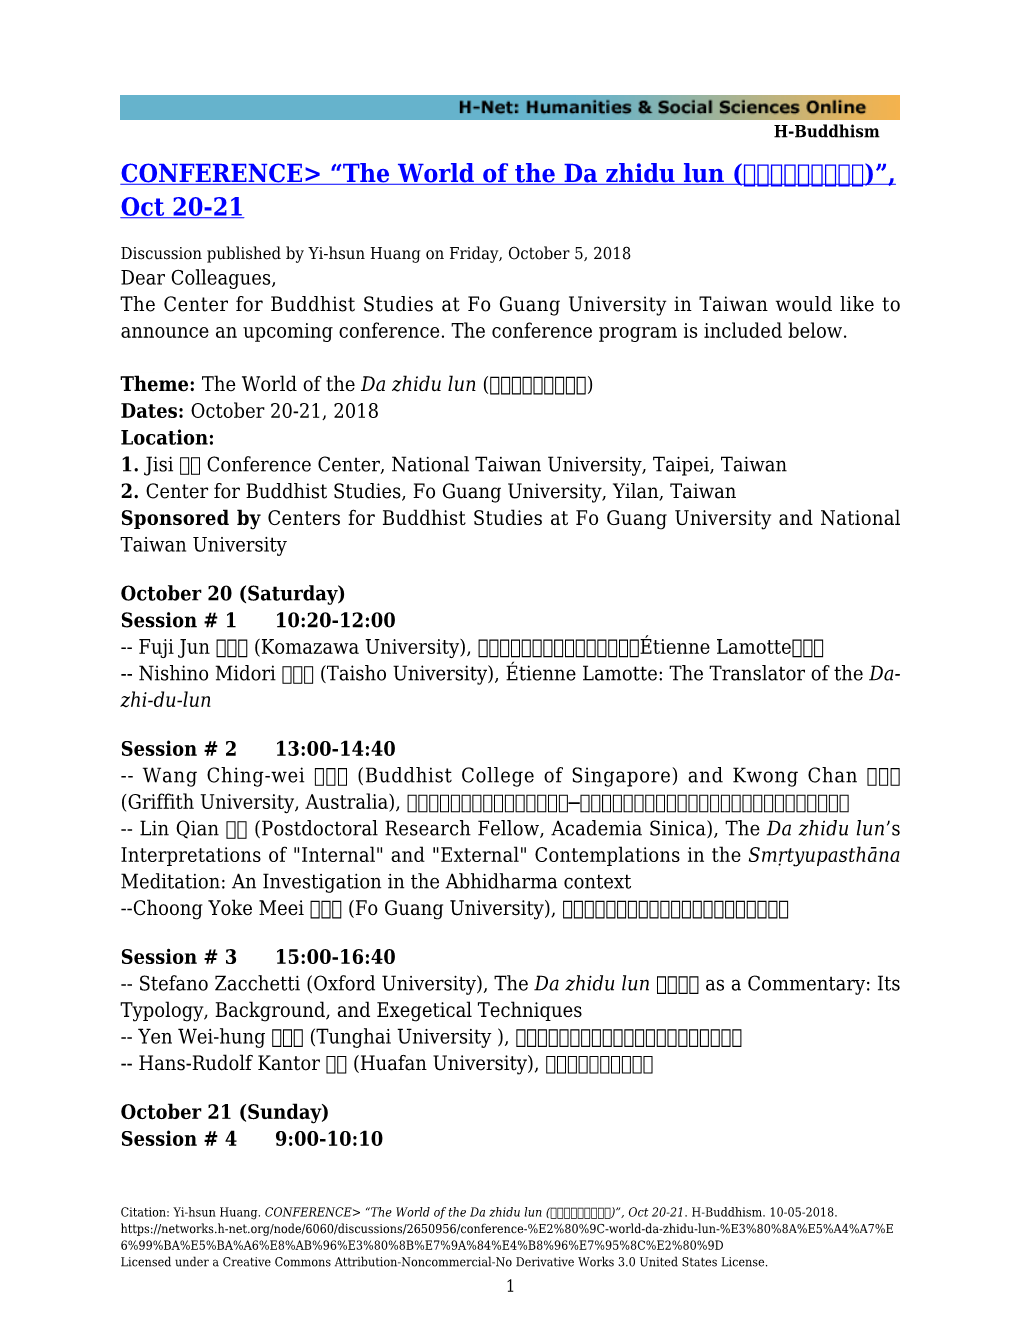 The World of the Da Zhidu Lun (《大智度論》的世界)”, Oct 20-21